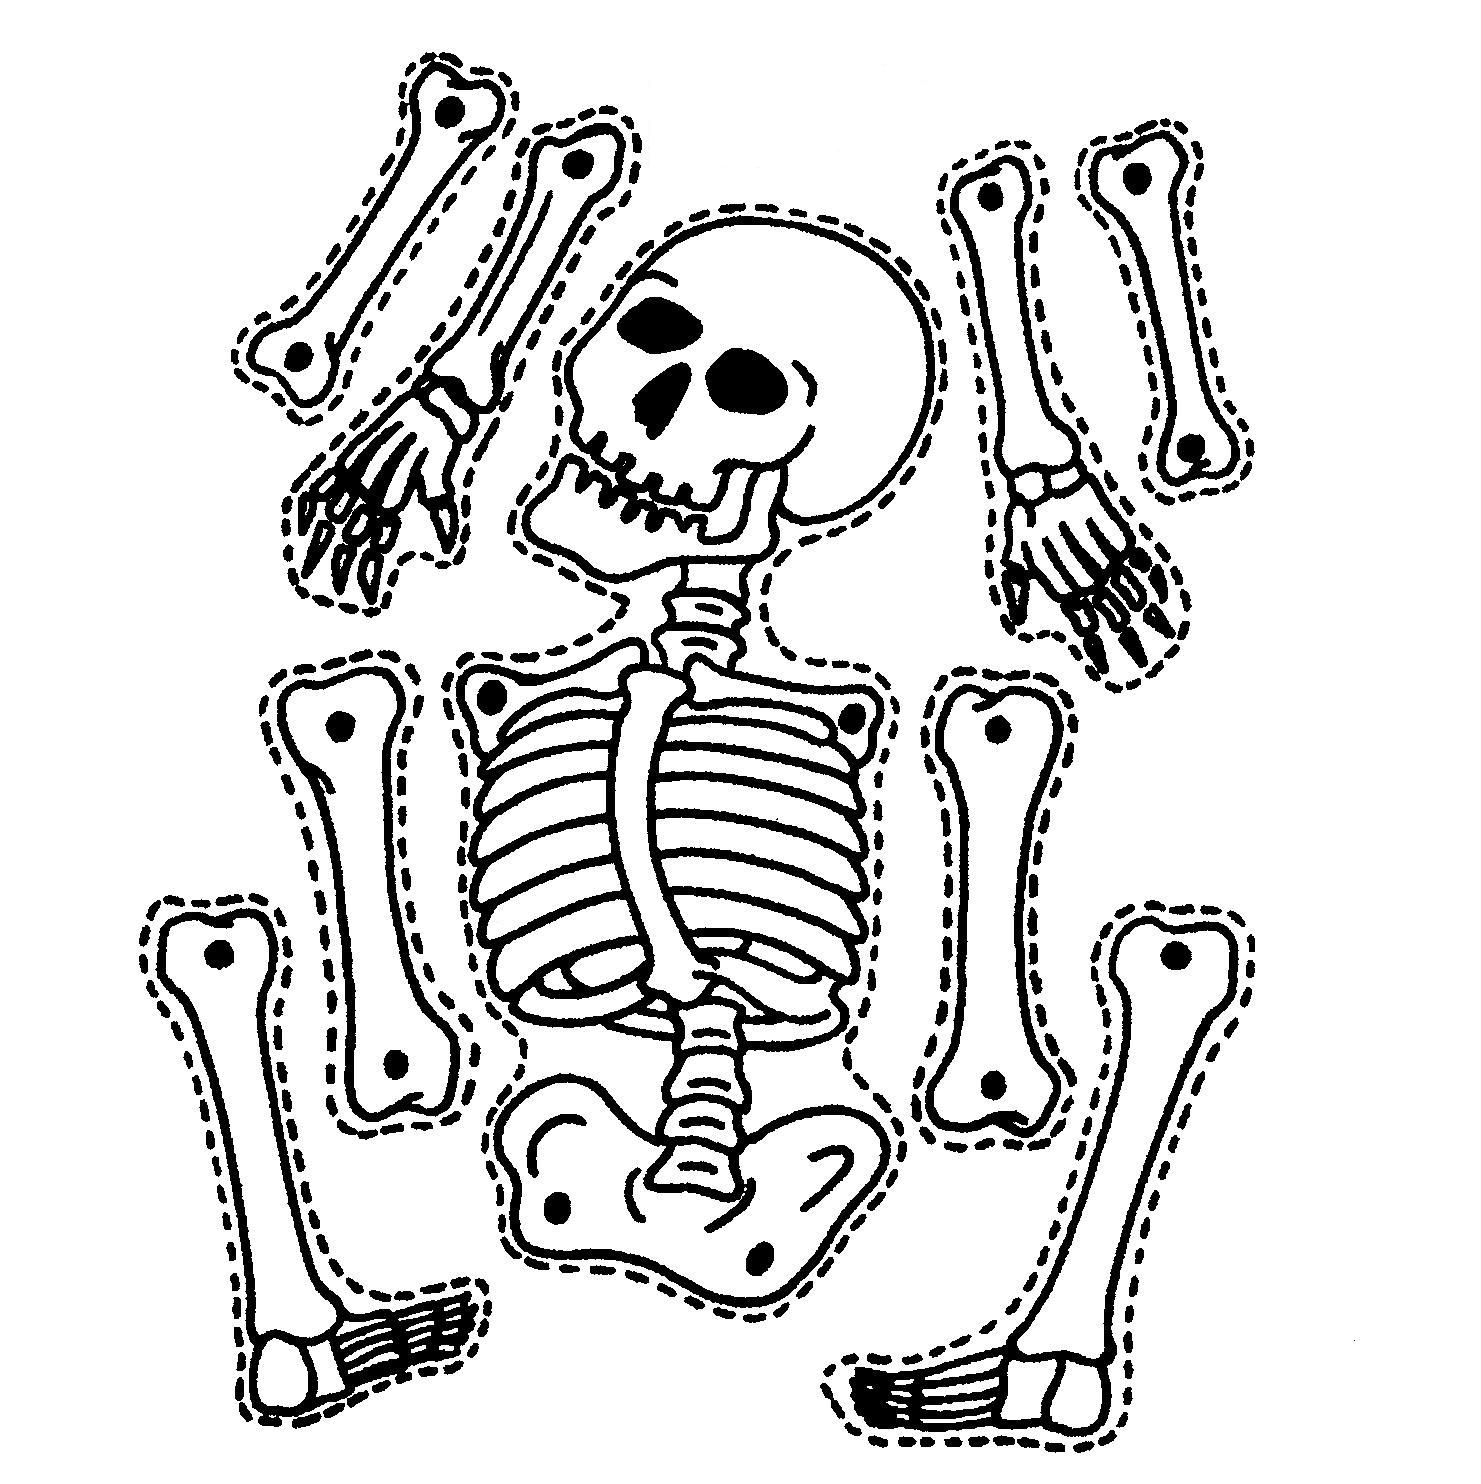 6 Best Images of Skeleton Clip Art Free Printable - Halloween ...